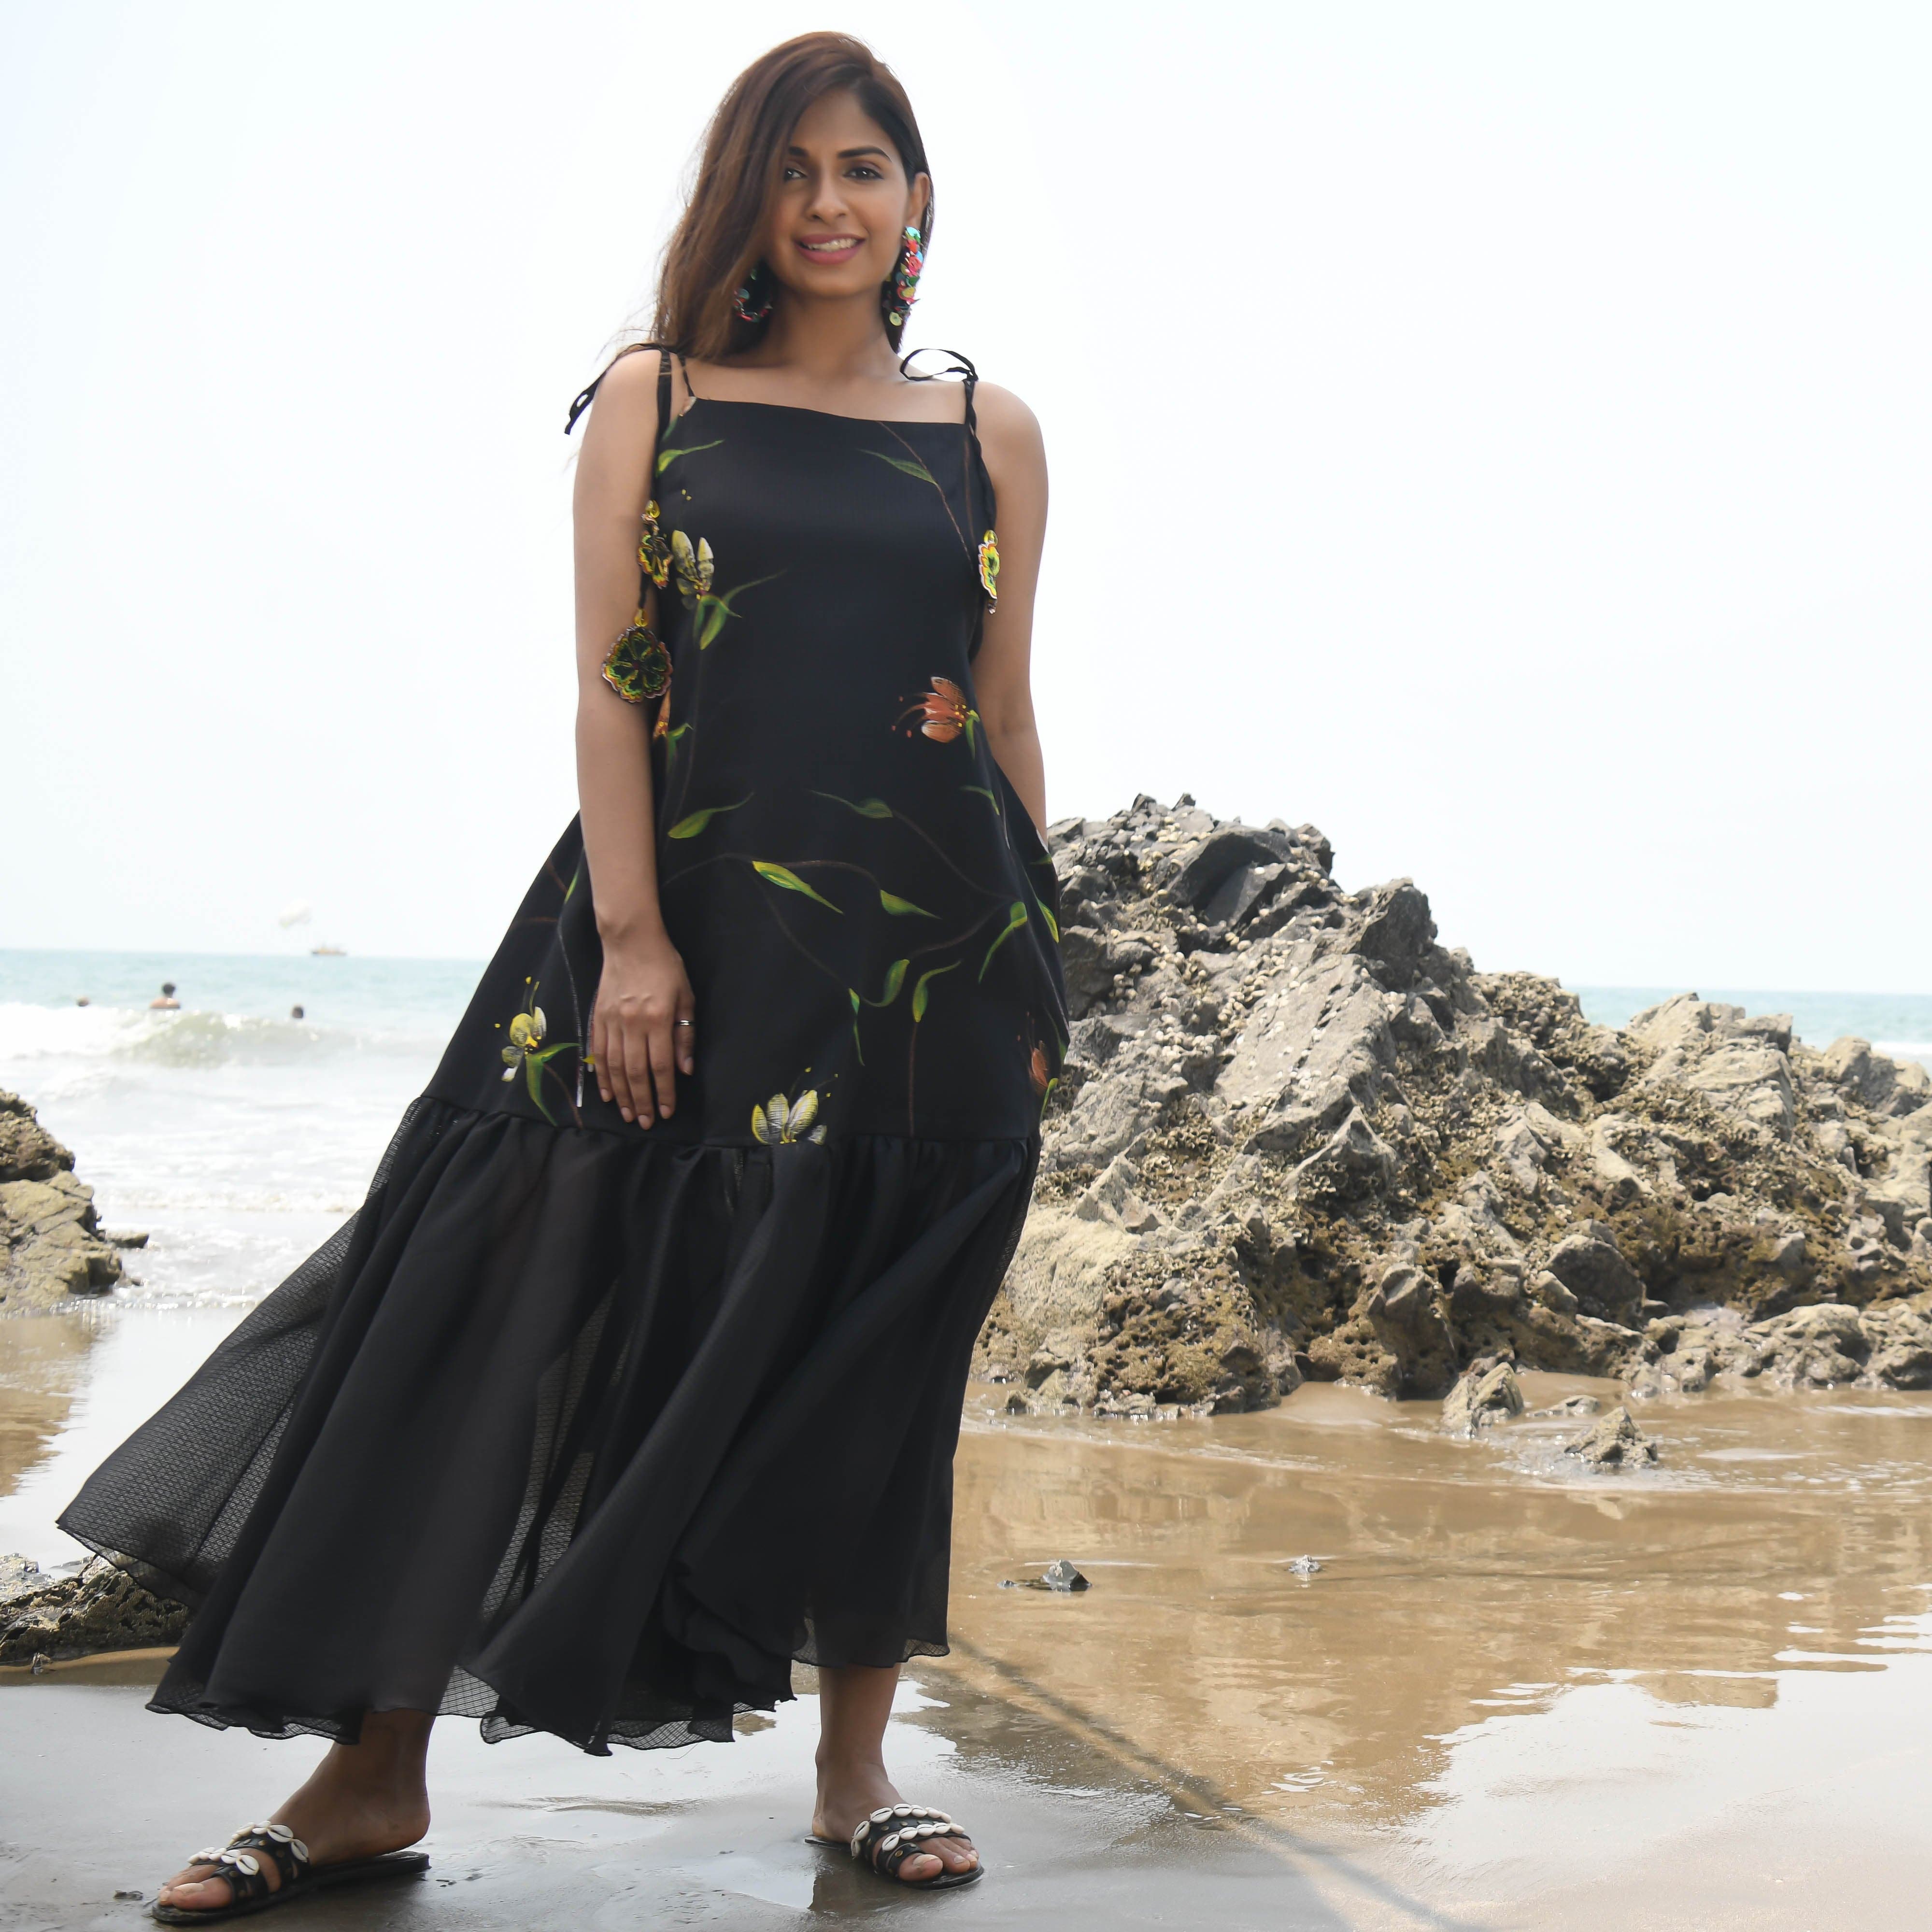  Raven Handpainted Black Summer Cotton Dress For Women Online